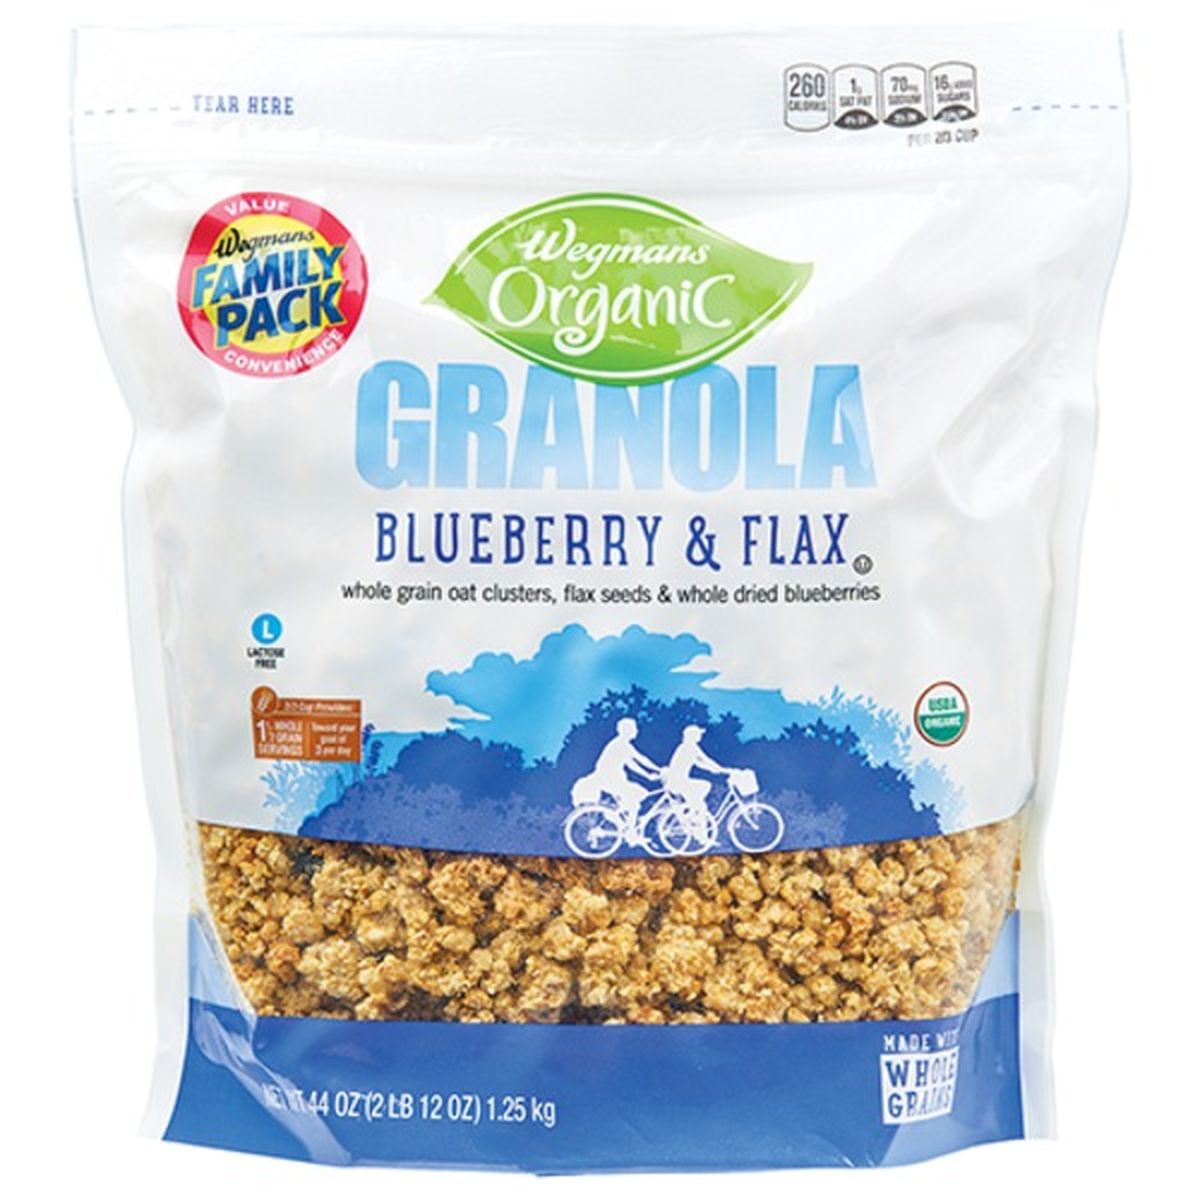 Calories in Wegmans Organic Blueberry & Flax Granola, FAMILY PACK